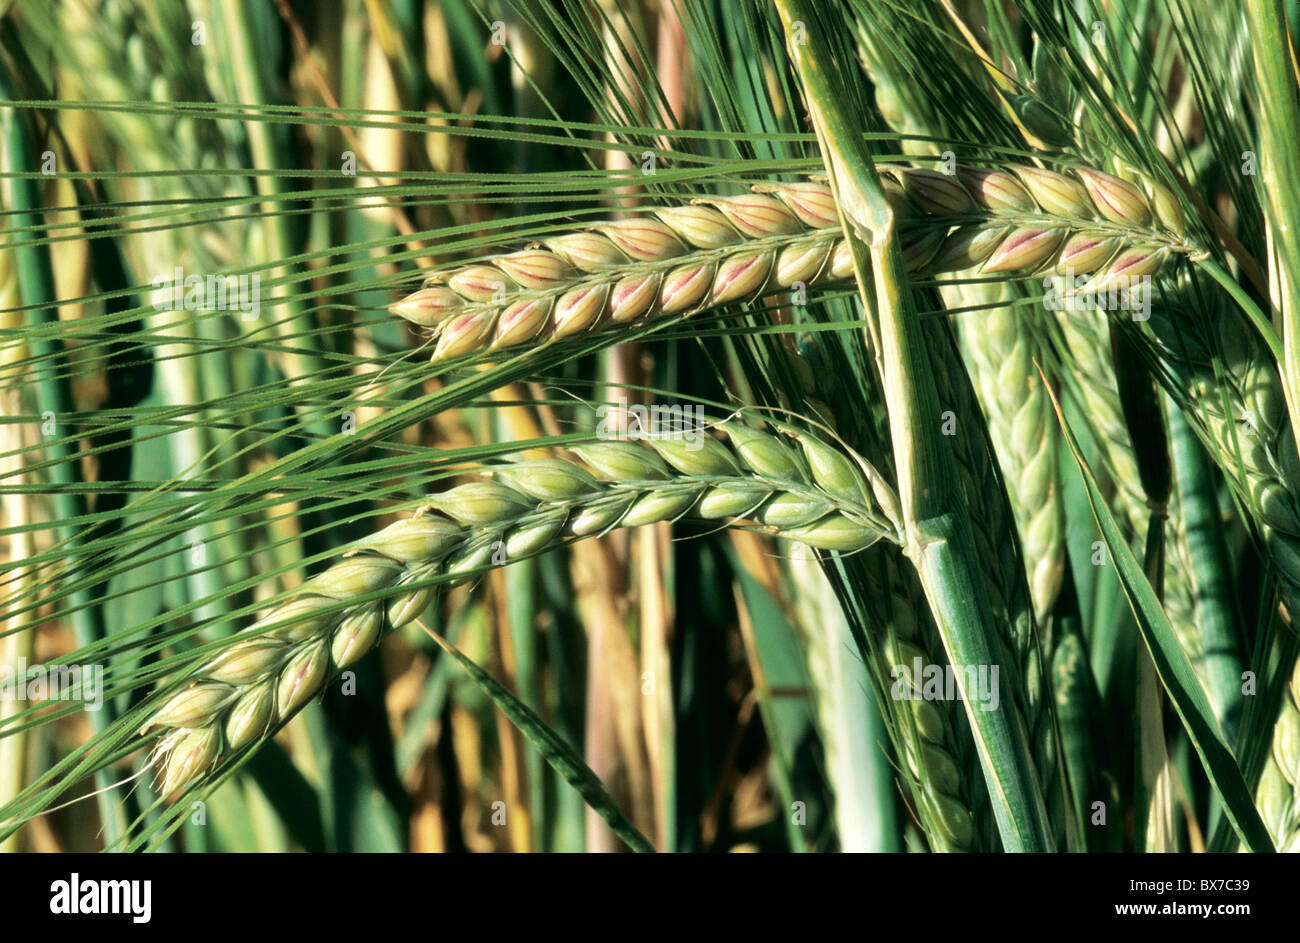 Barley, 2 row, immature stalks. Stock Photo